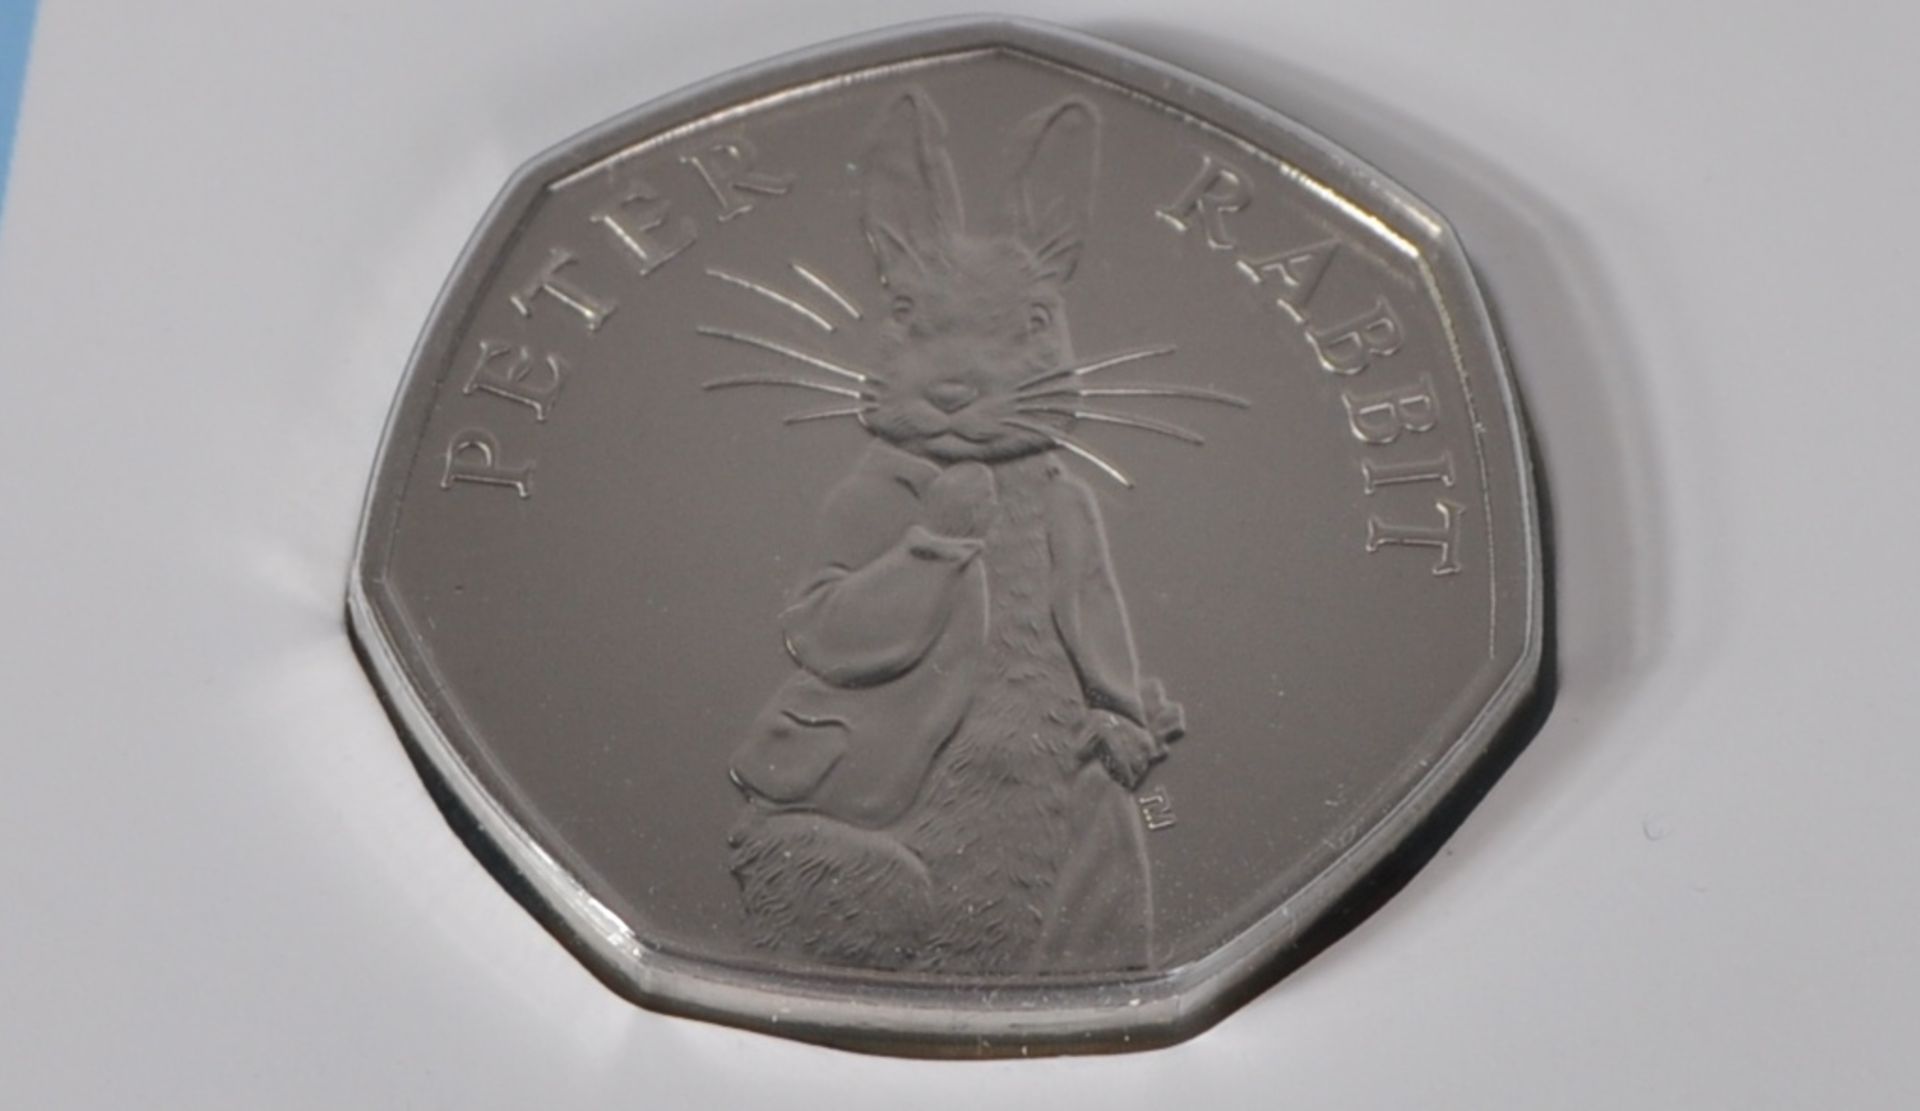 COINS - ROYAL MINT - BEATRIX POTTER - SET OF X10 50P COINS - Image 7 of 7